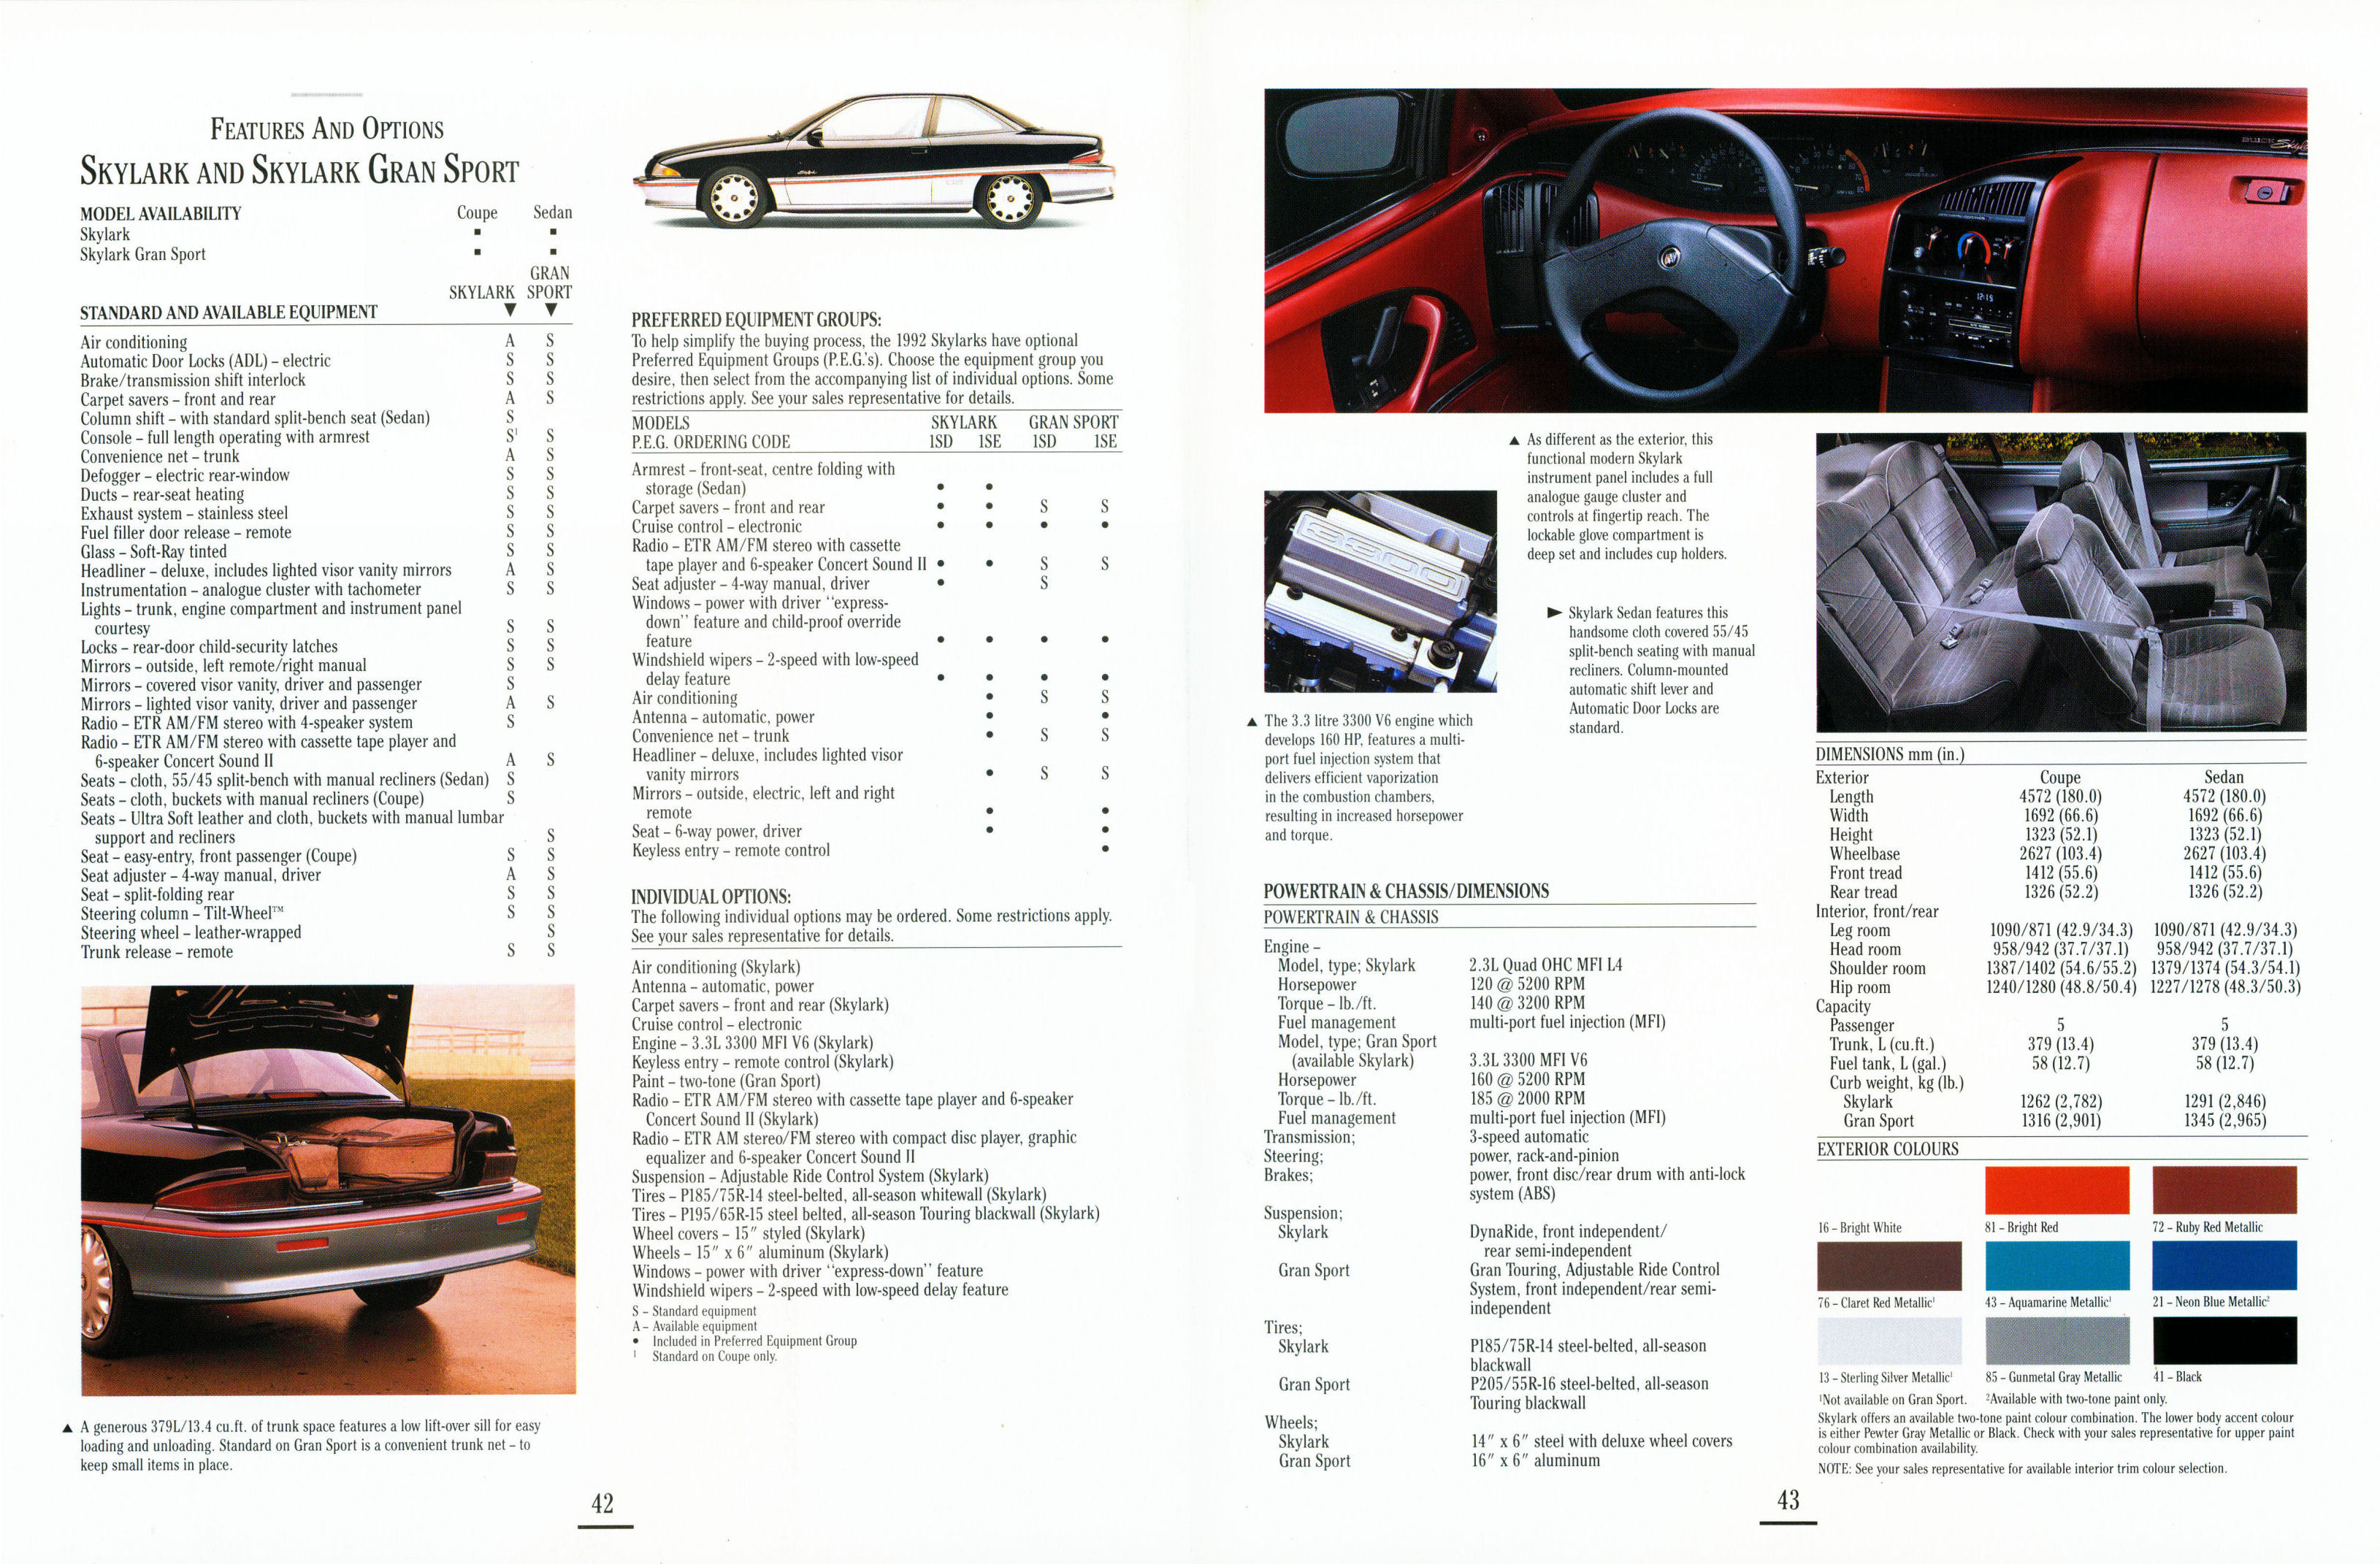 1992_Buick_Full_Line_Prestige_Cdn-42-43